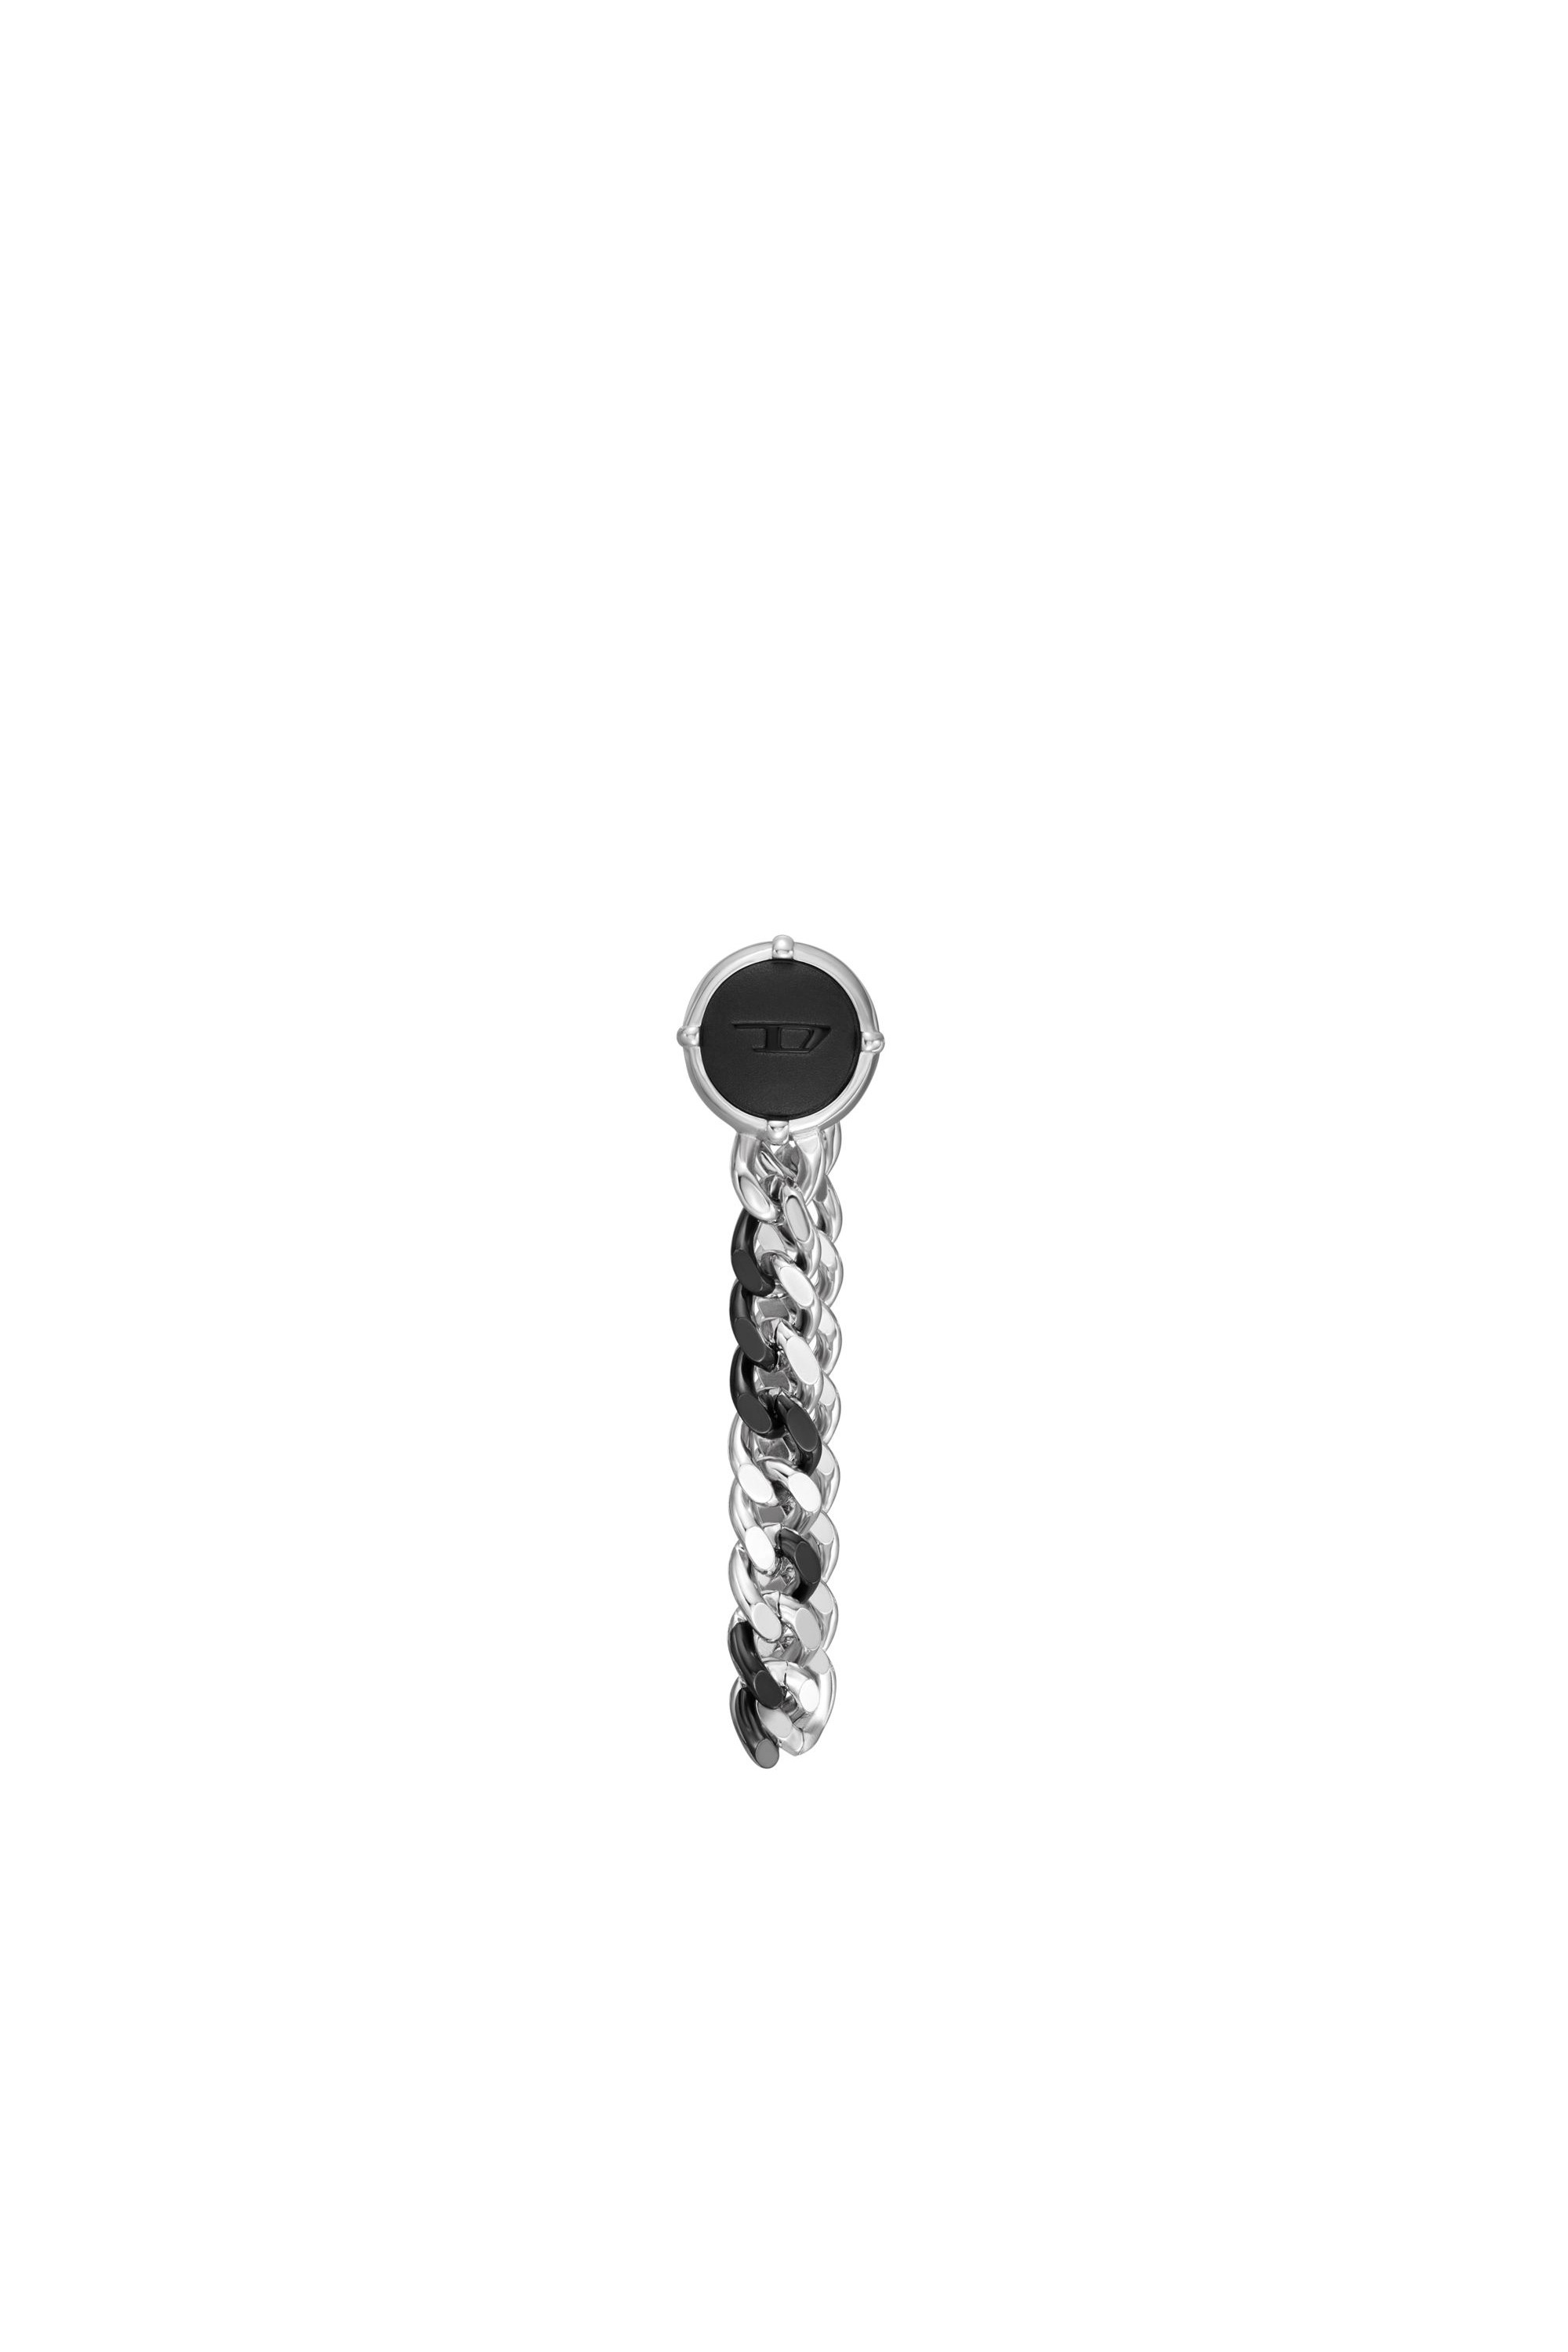 Diesel - DX1500, Male Stainless steel stud earring in シルバー - Image 2